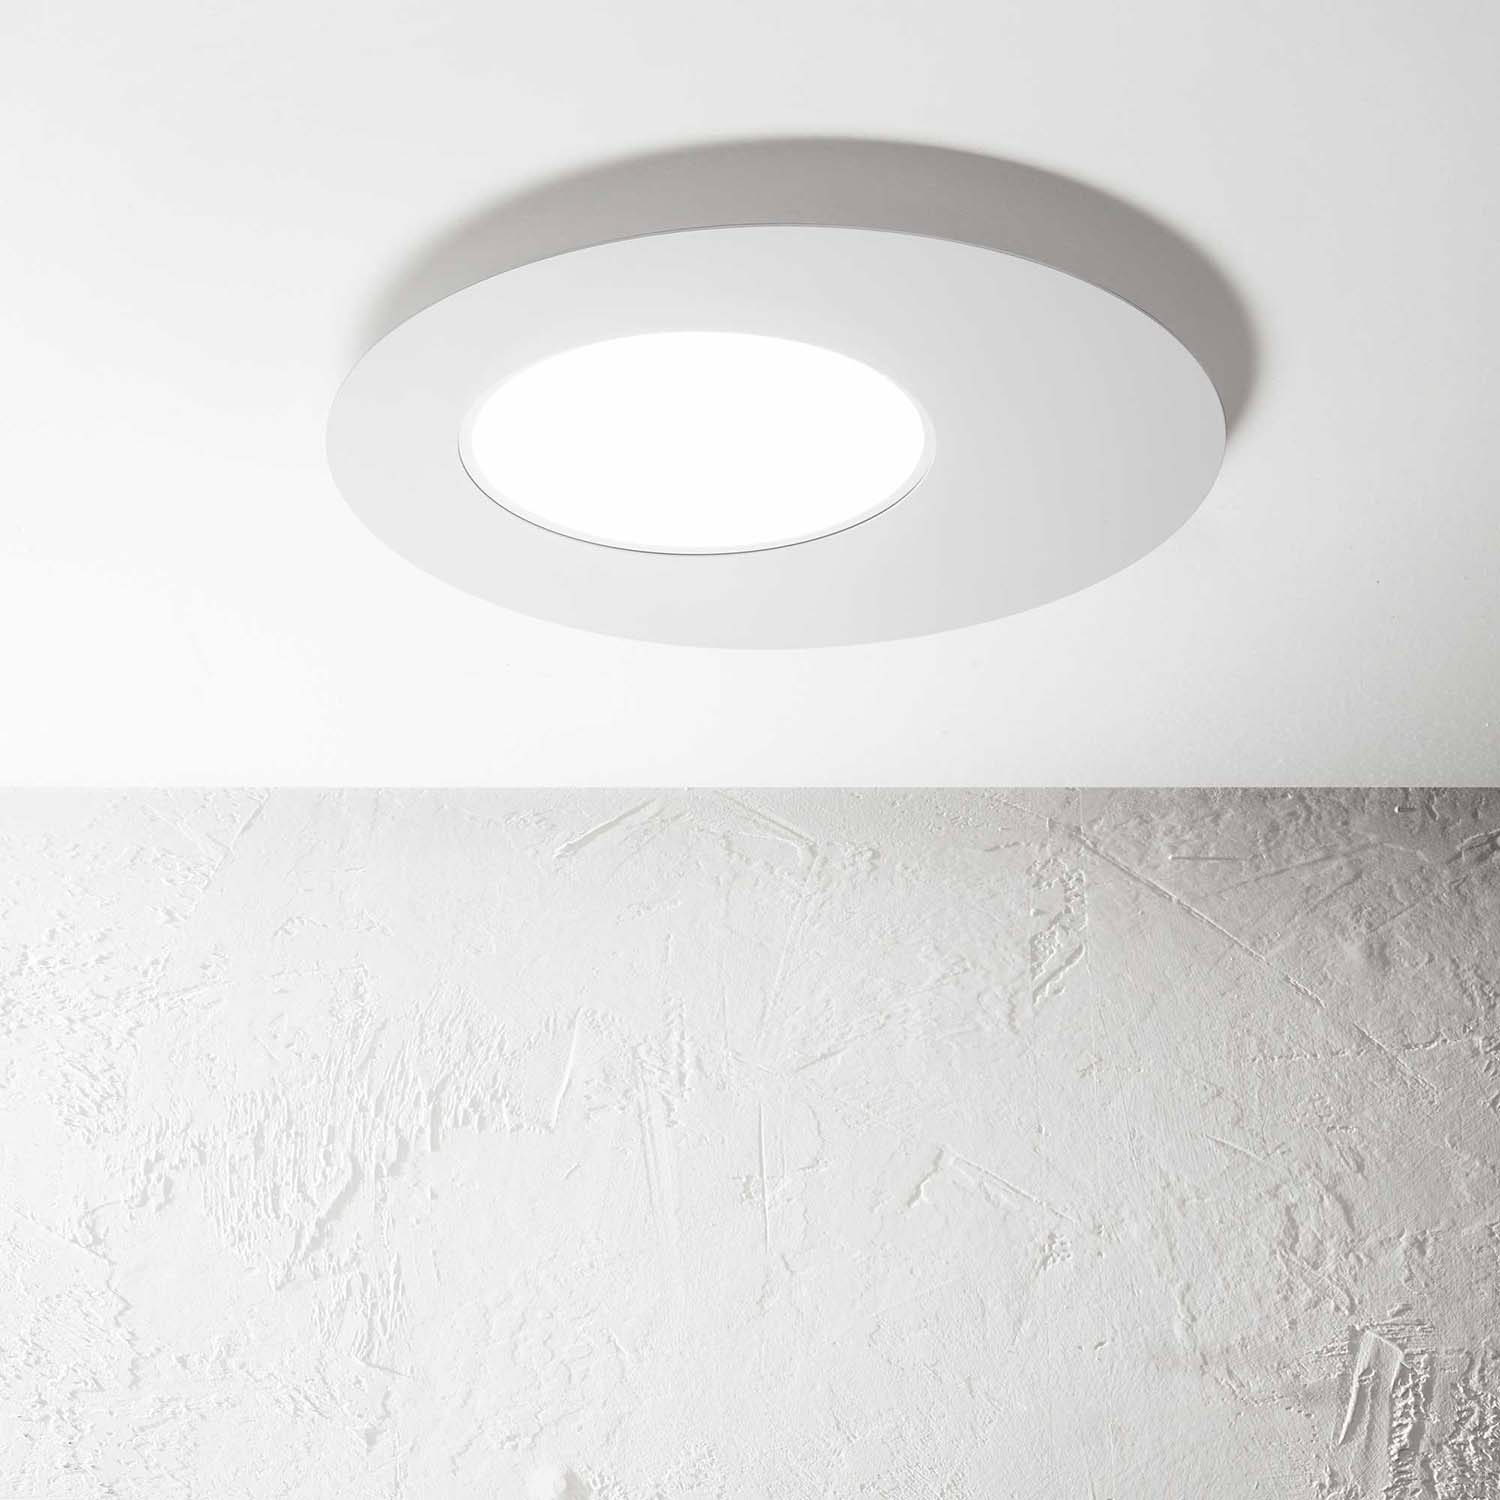 IRIDE - Designer and discreet extra-flat ceiling light, black or white